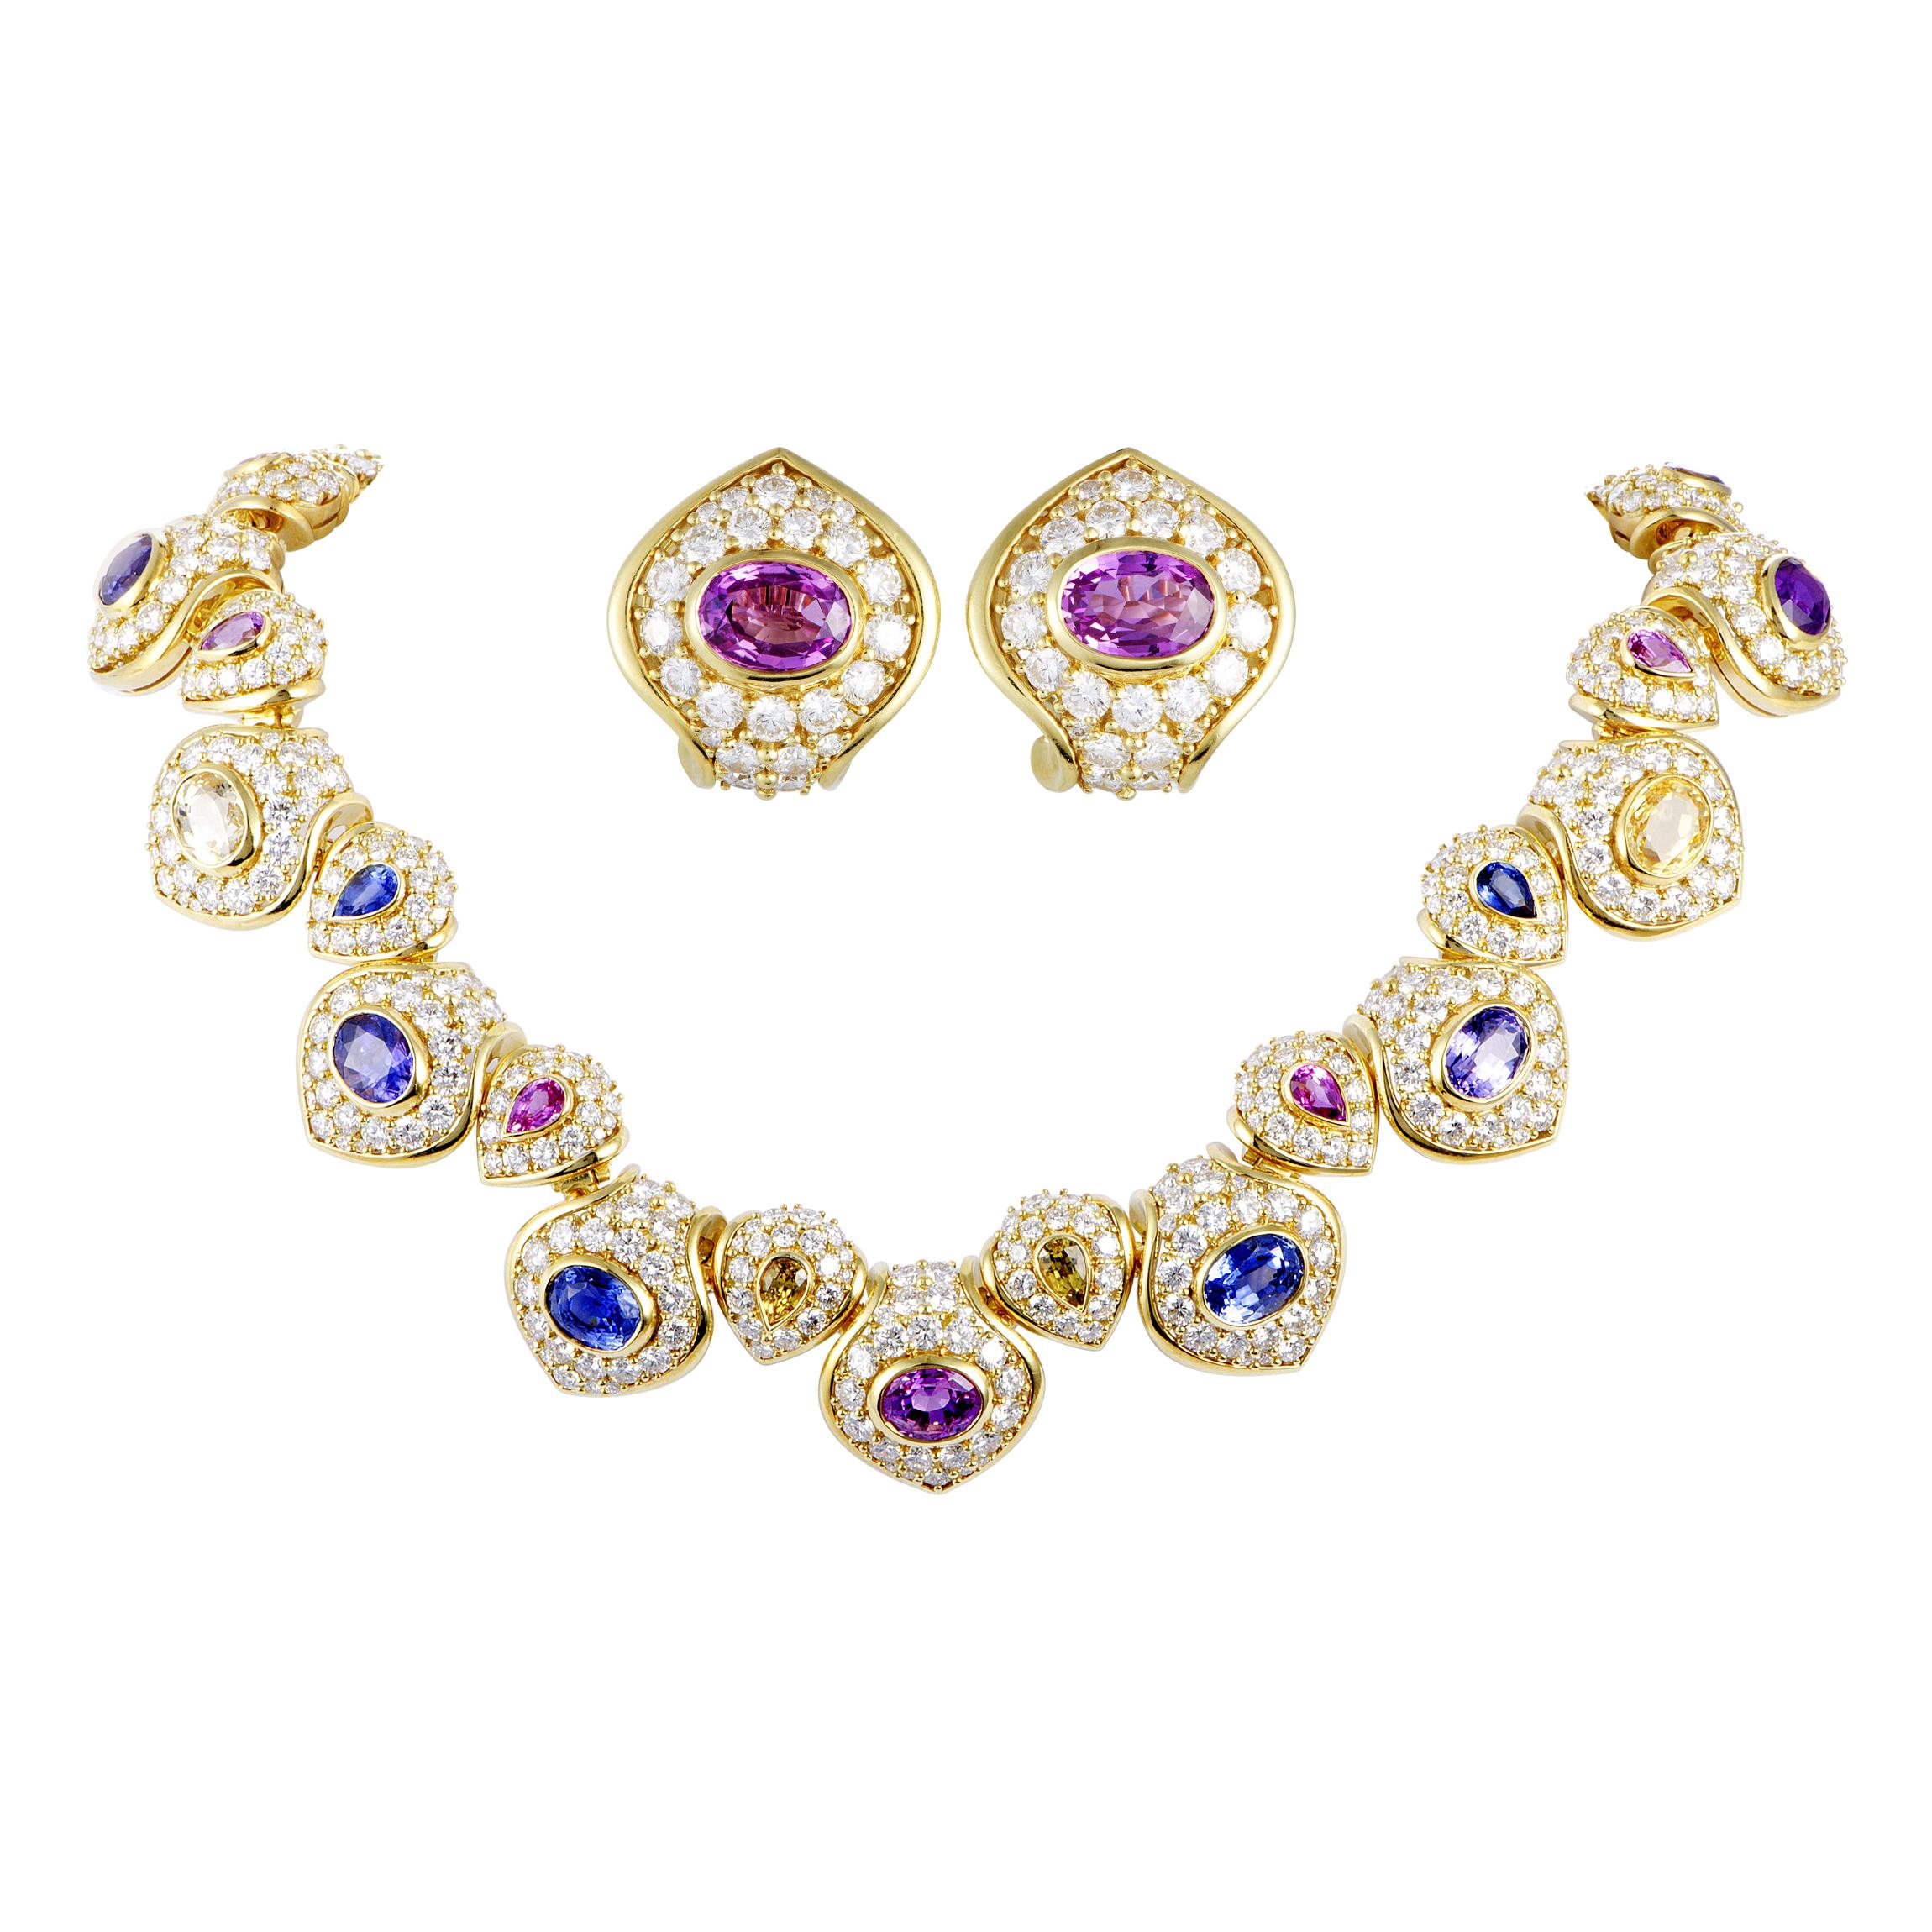 Kurt Wayne Diamond and Multicolored Sapphire Gold Earrings and Necklace Set